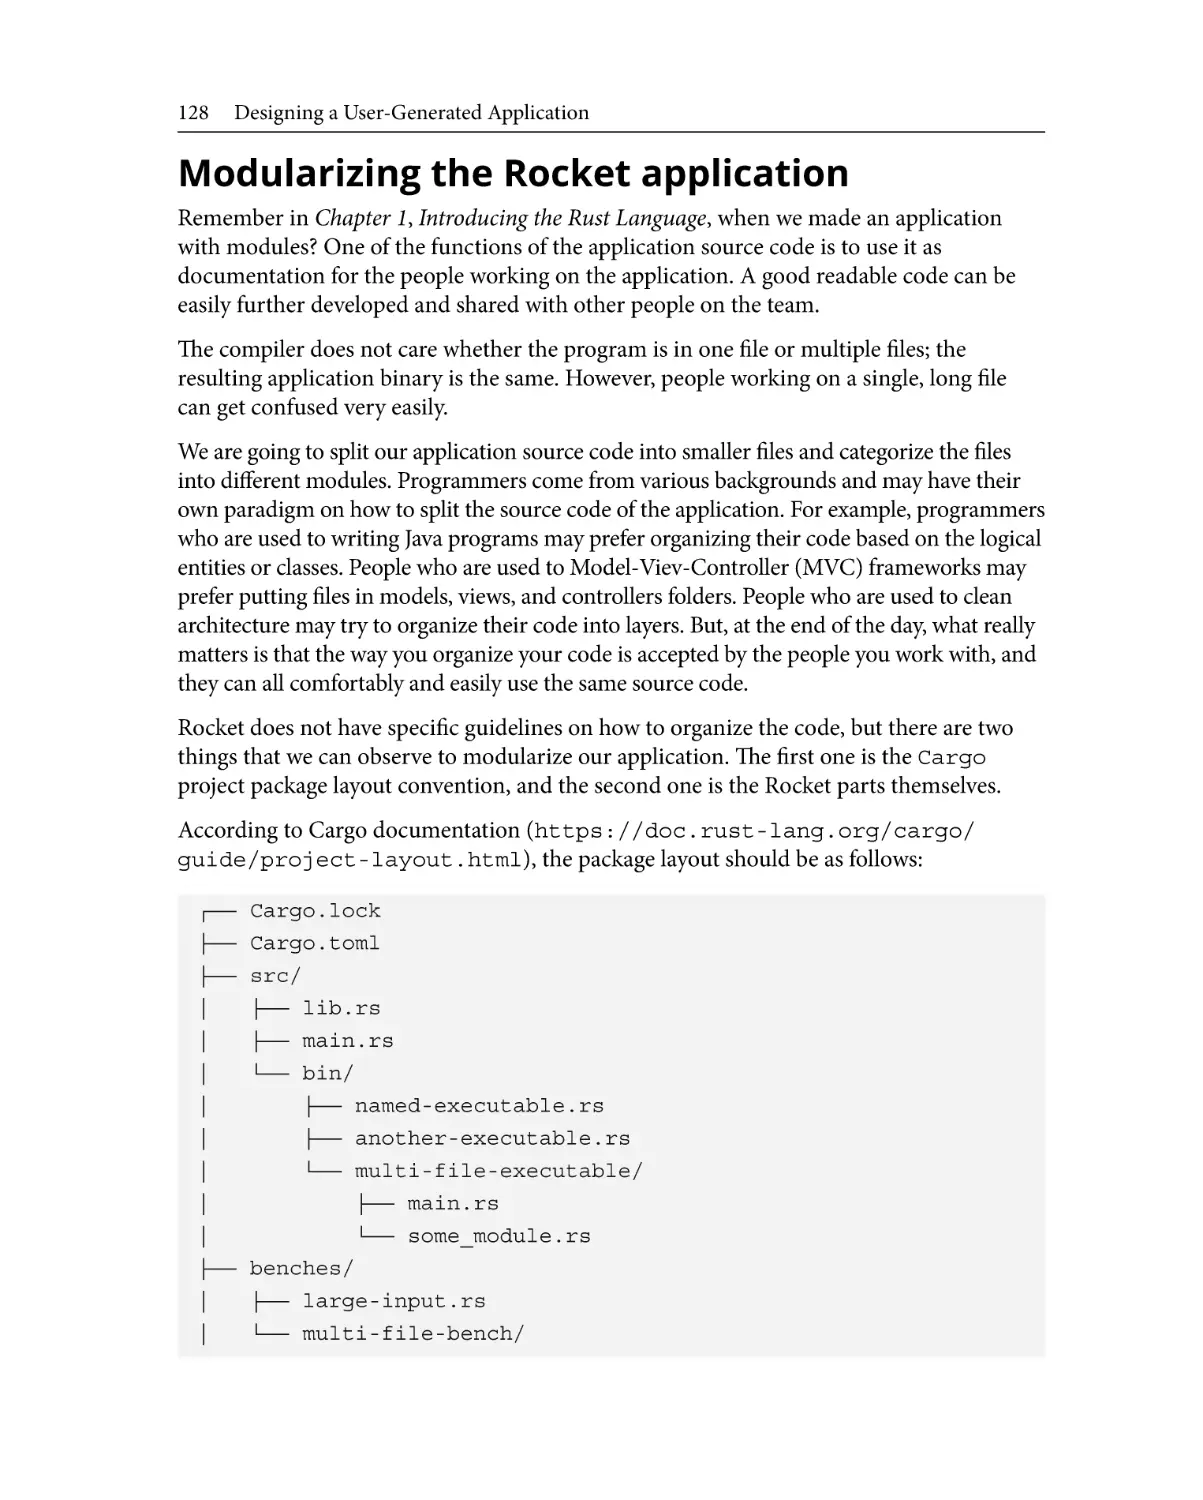 Modularizing the Rocket application